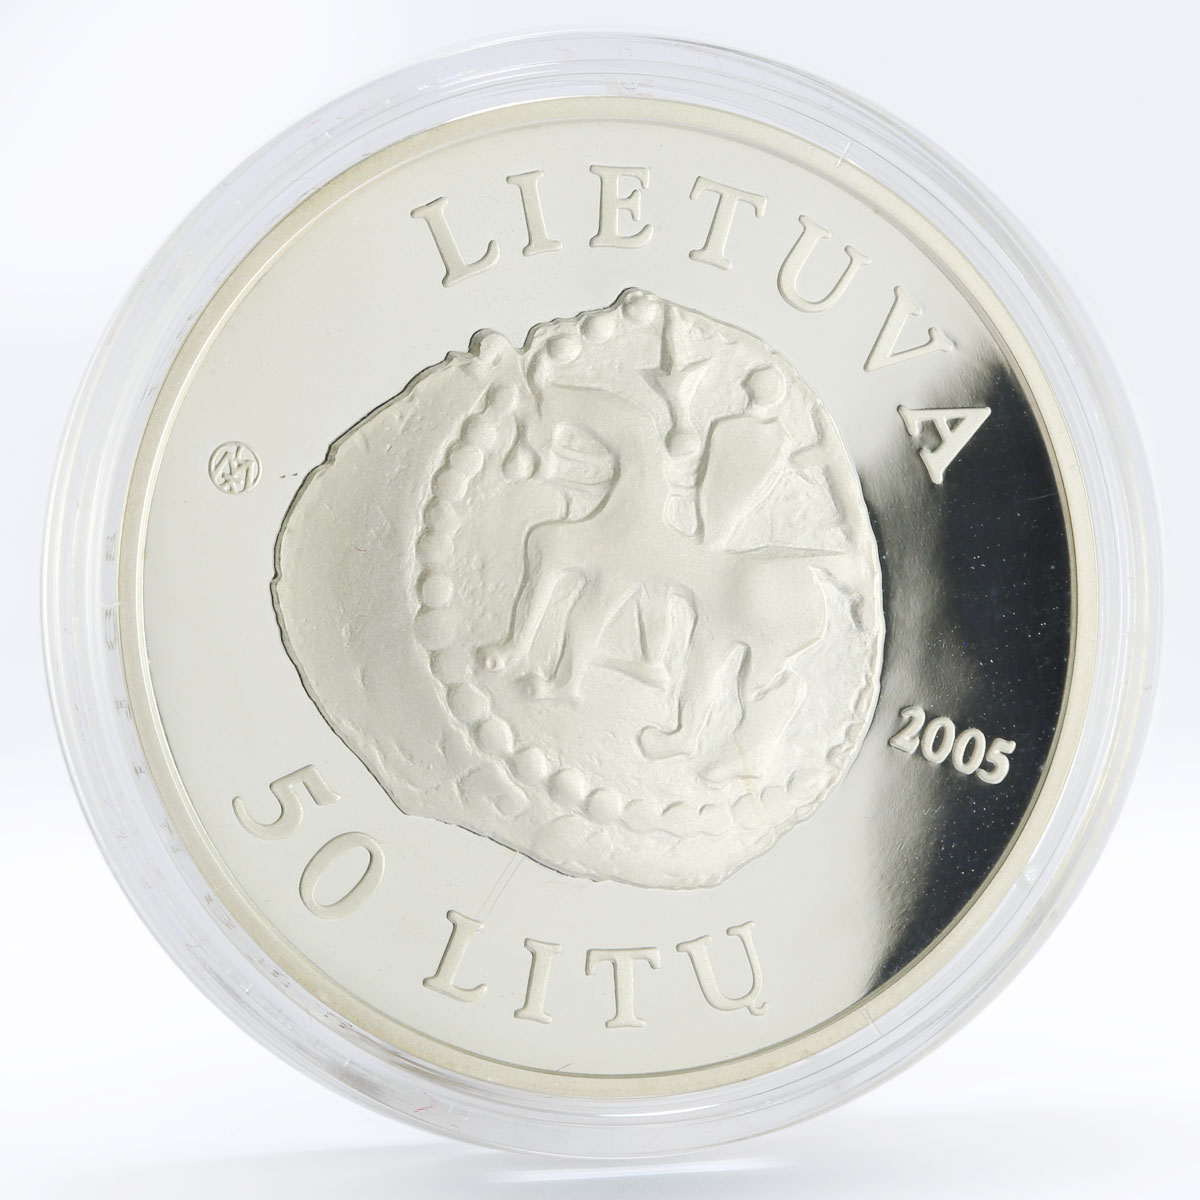 Lithuania 50 litu Architecture Castles Kernave proof silver coin 2005